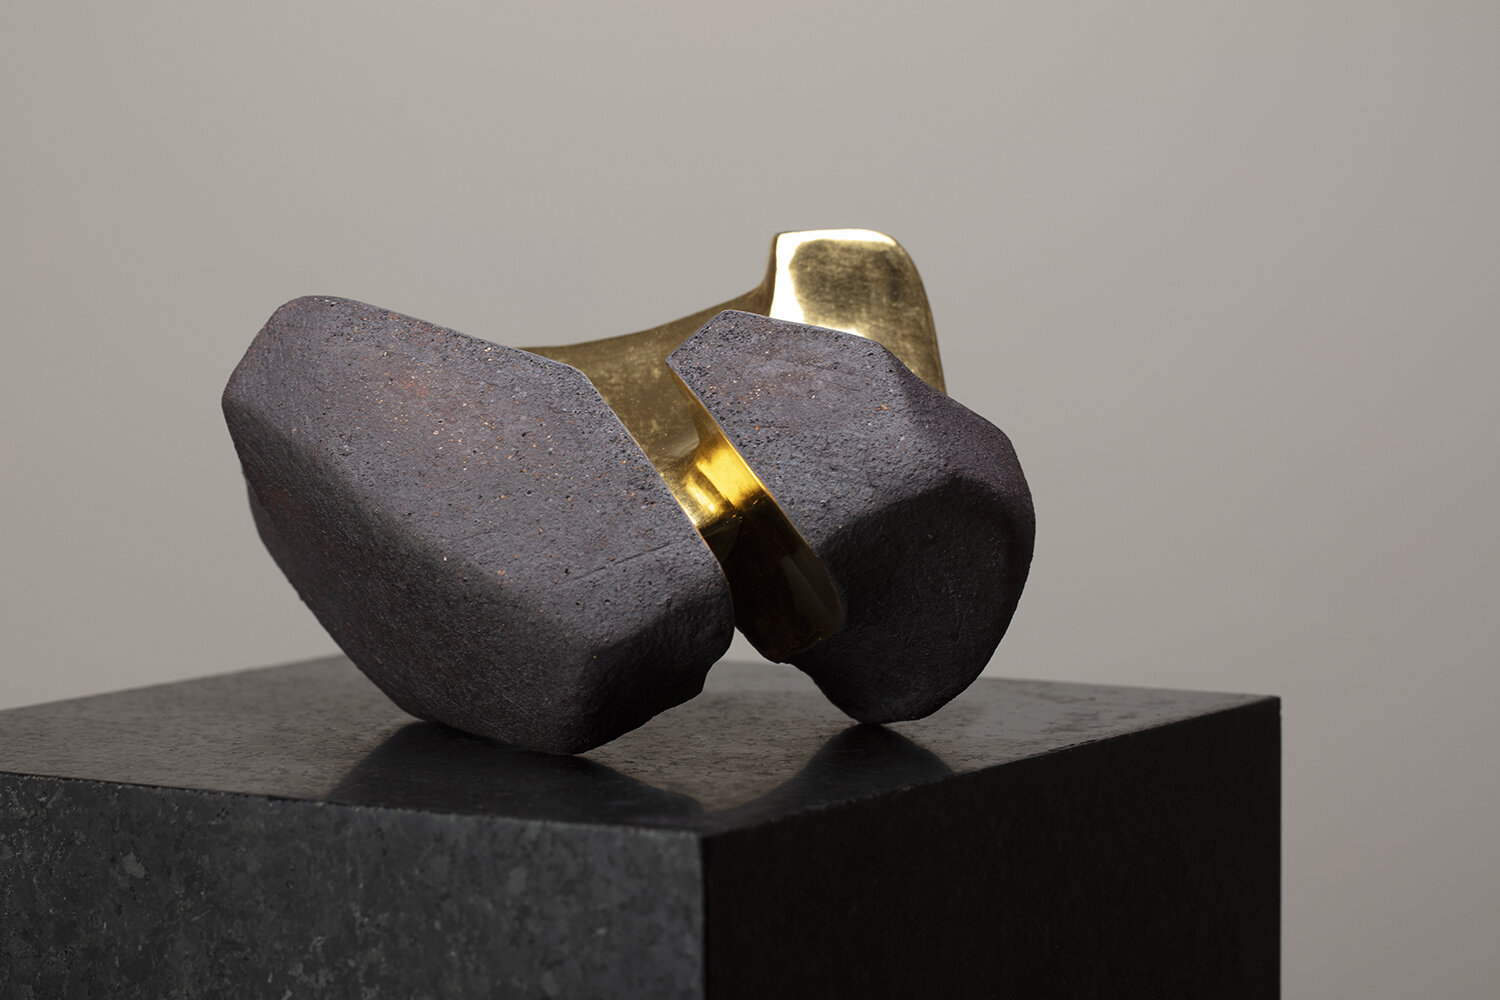 UNTITLED - CERAMIC AND GOLD sculpture 2020/2 - J. Yázpik